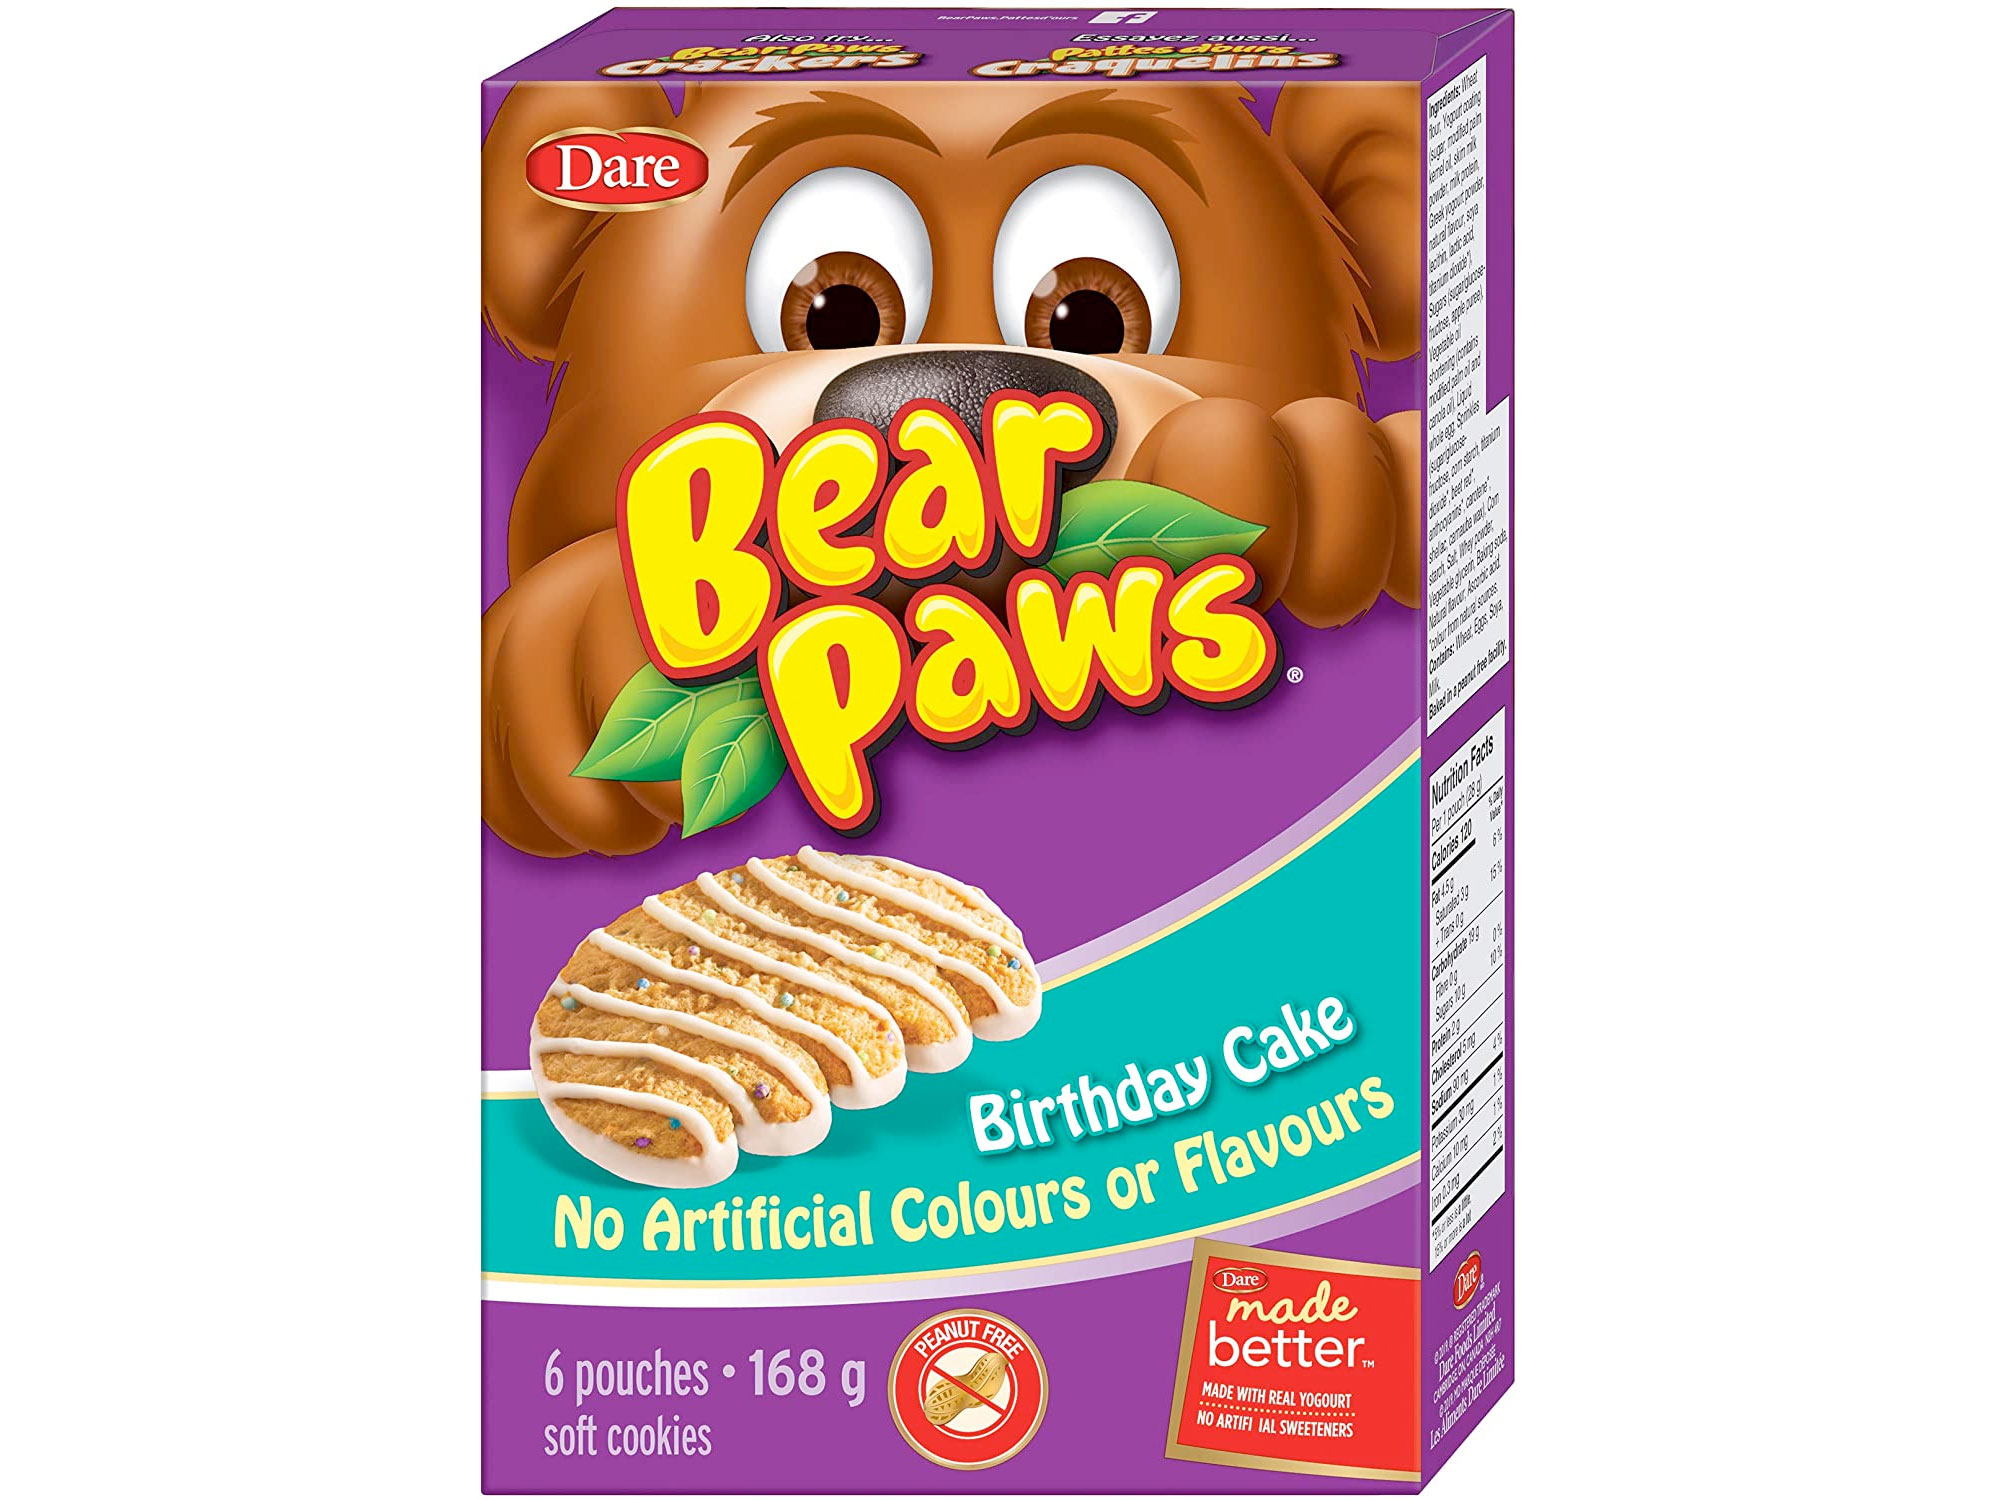 Amazon：Dare Bear Paws Birthday Cake Cookies (168g)只卖$1.99